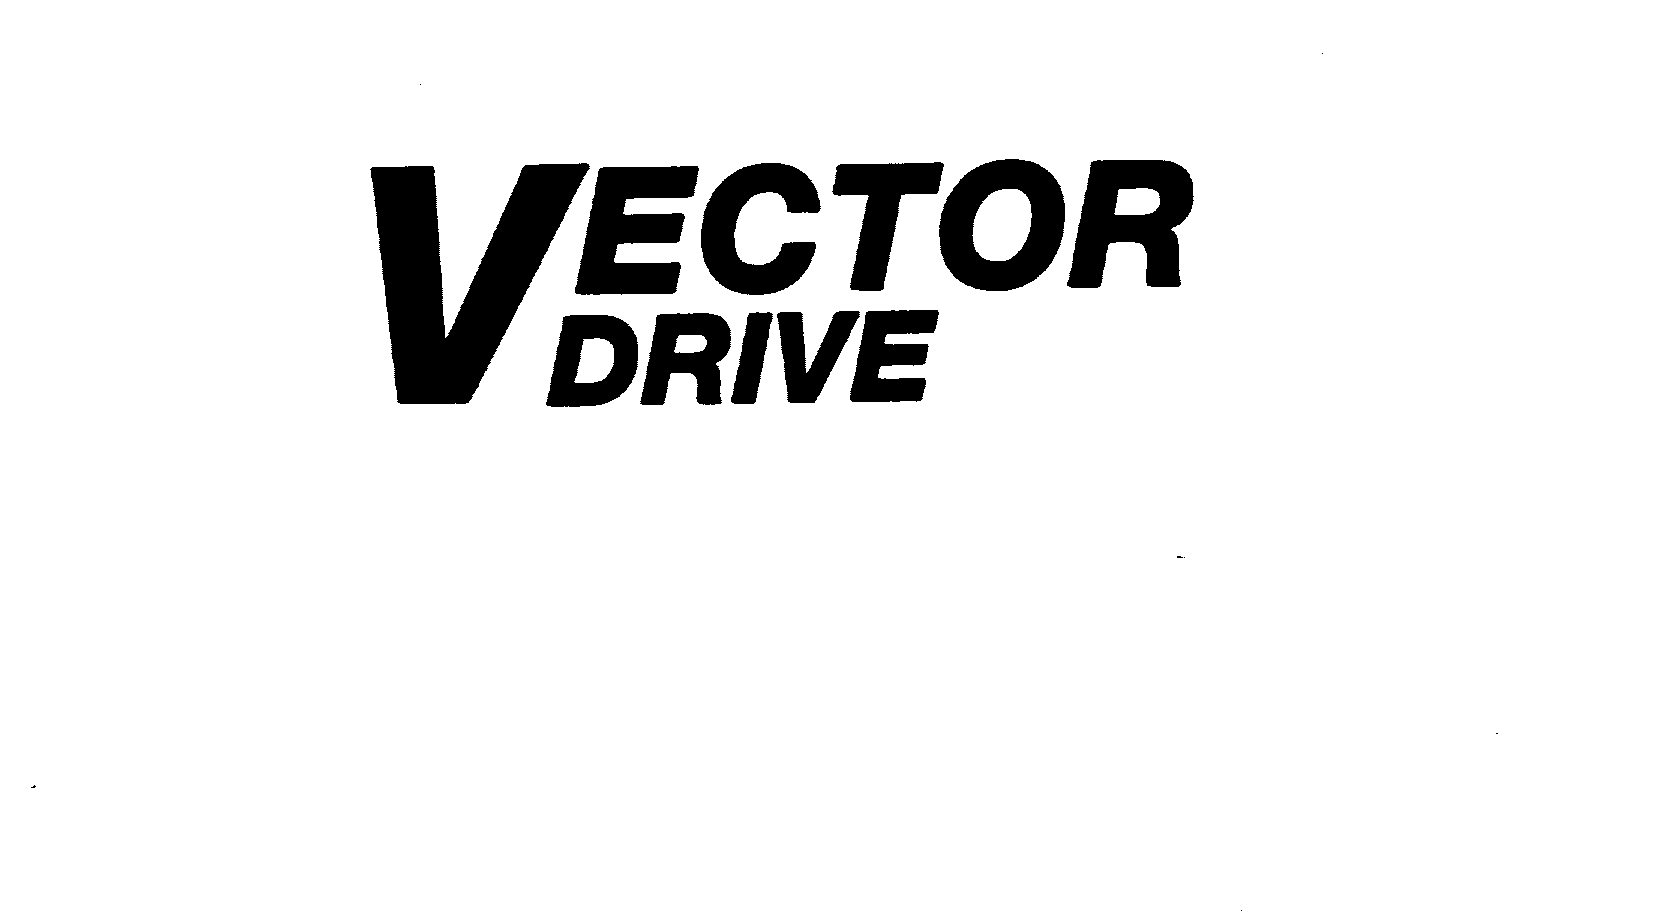  VECTOR DRIVE